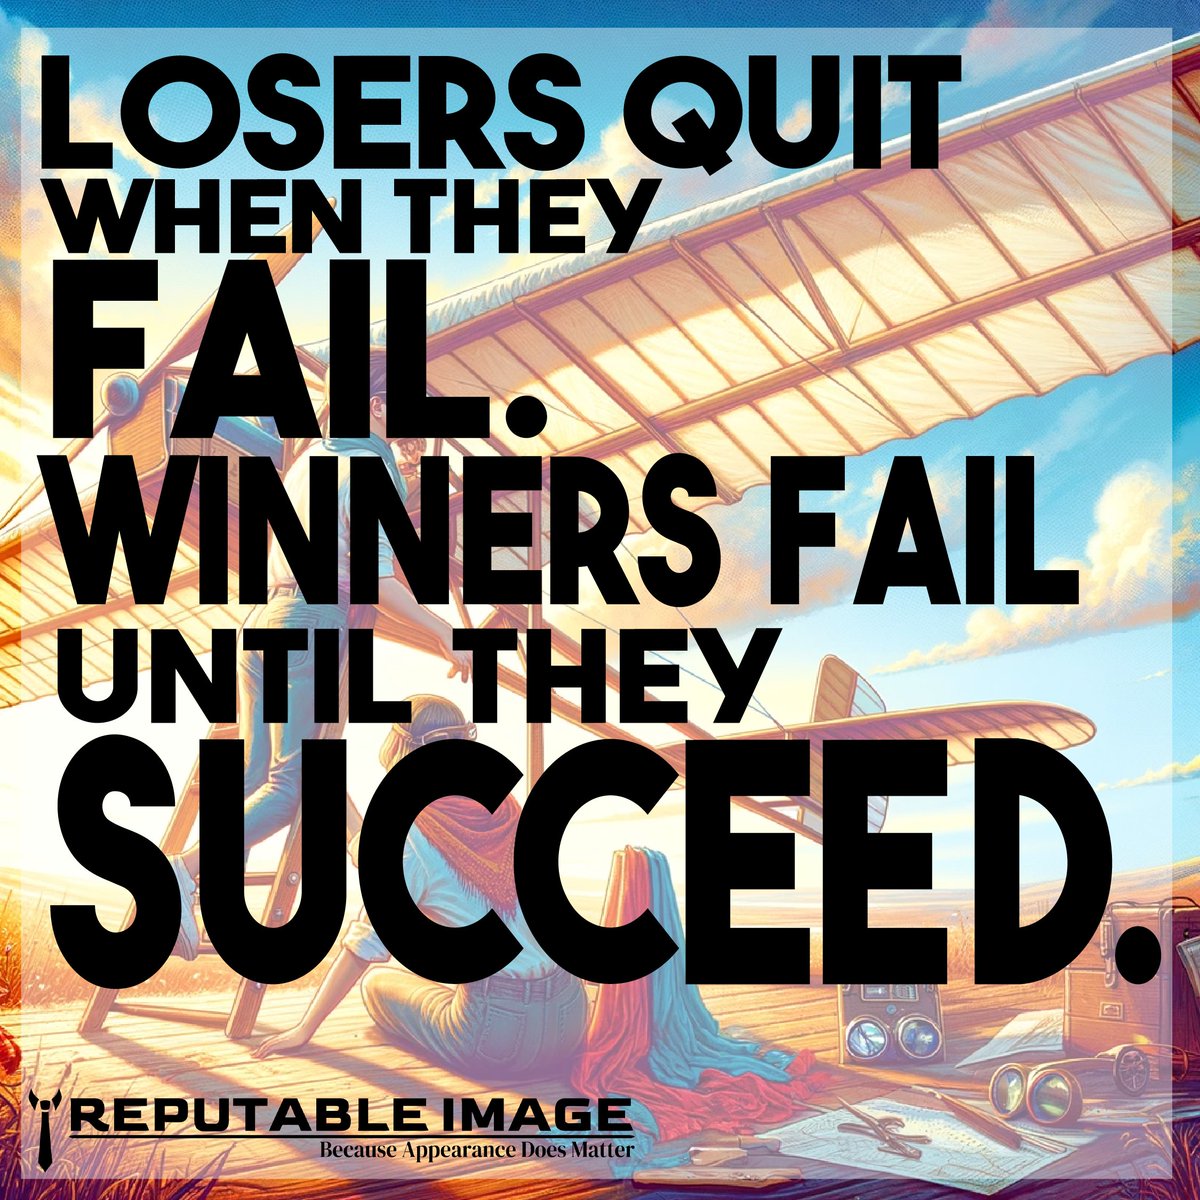 Turn SETBACKS into COMEBACKS! #Perseverance #FailureIsFeedback #KeepPushing #BusinessGrowth